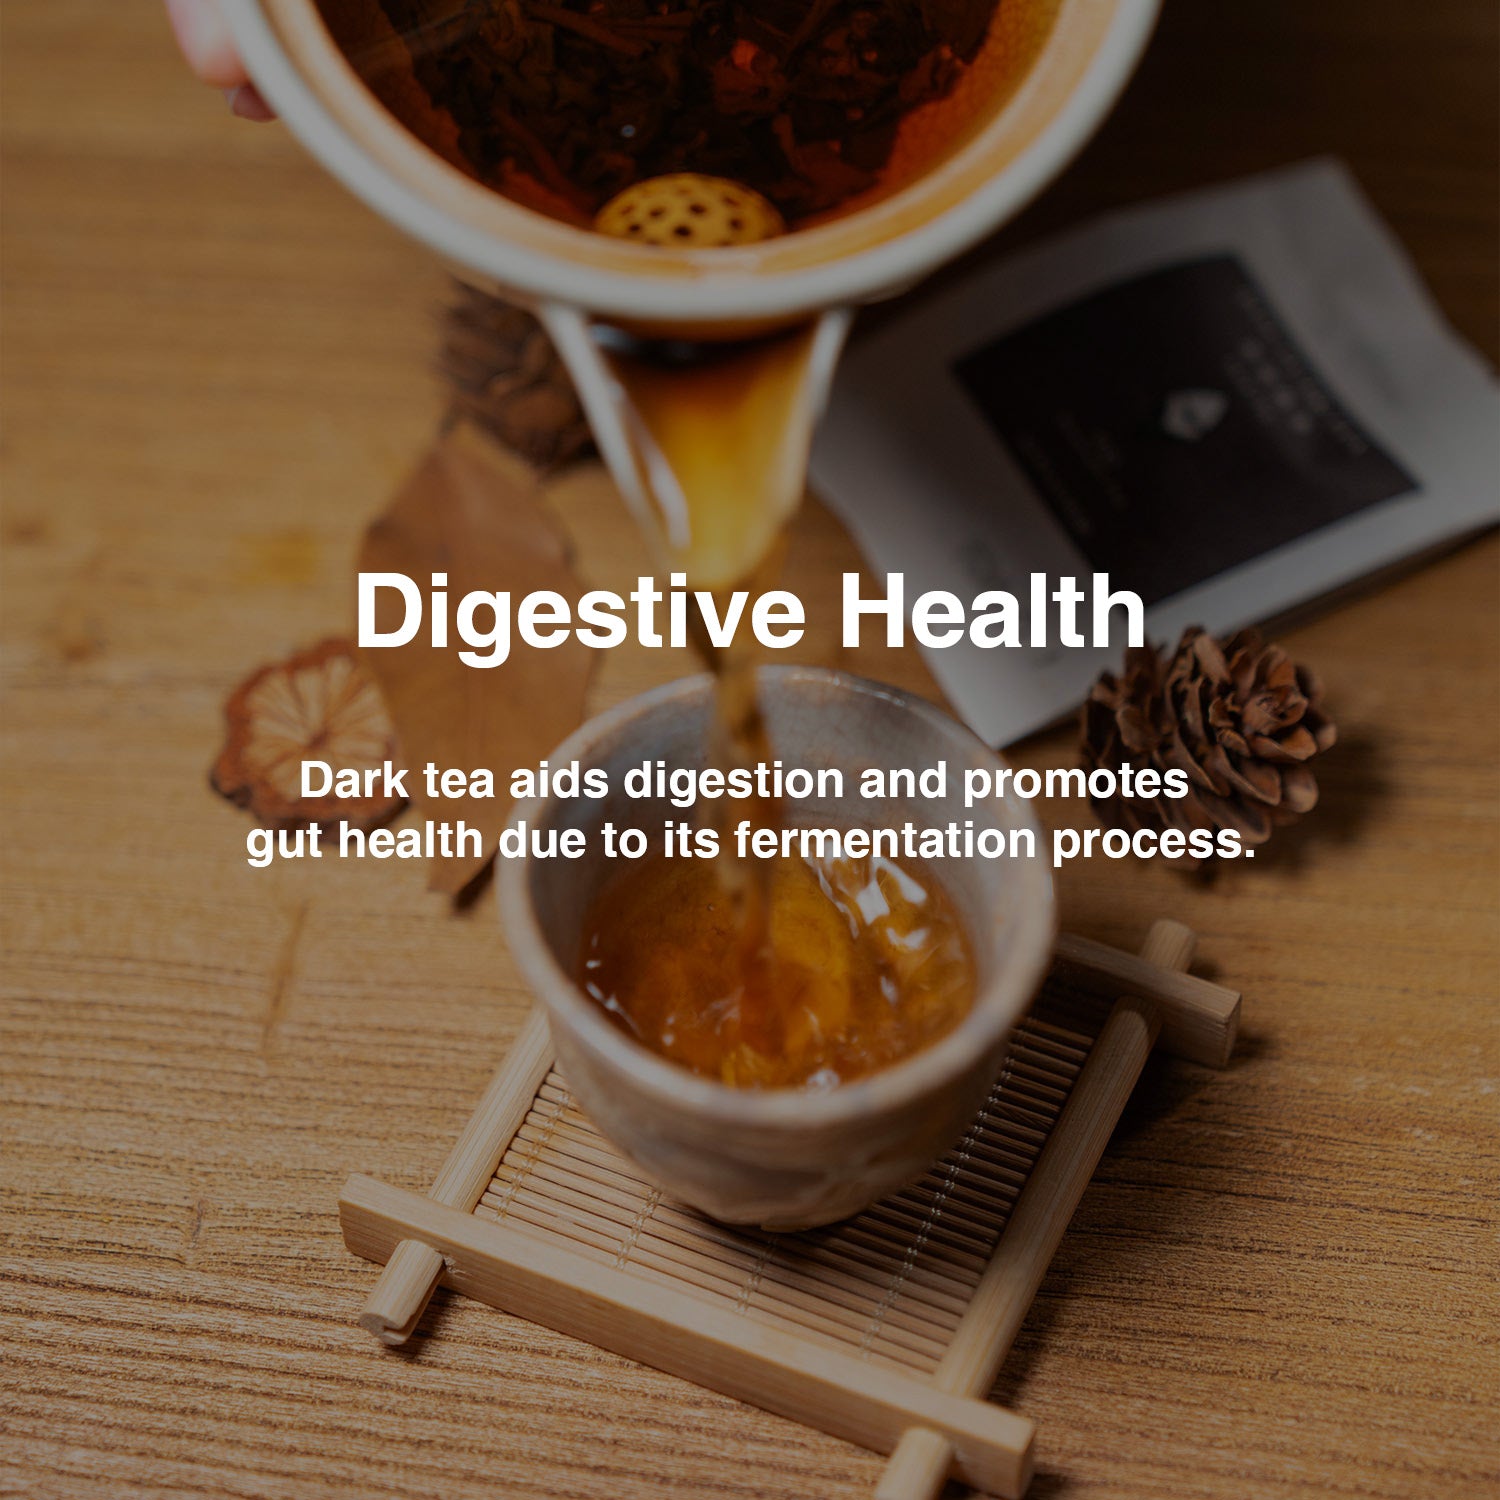 dark tea health benefits: digestive